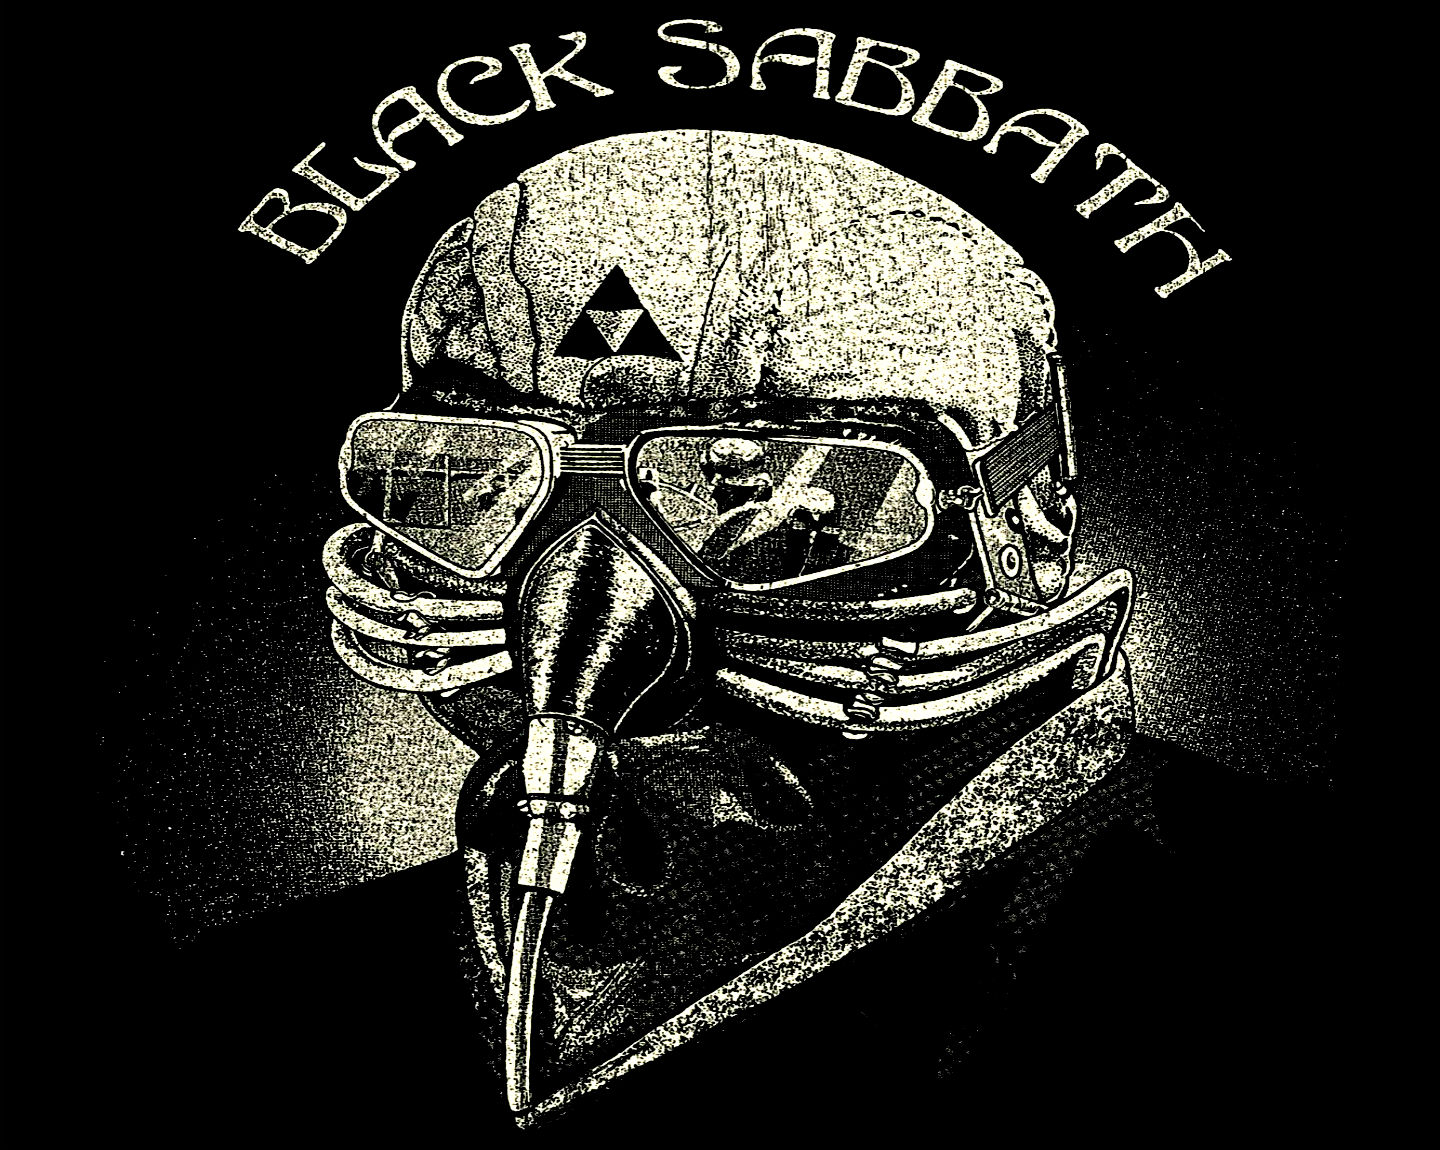 Music Black Sabbath HD Wallpaper | Background Image